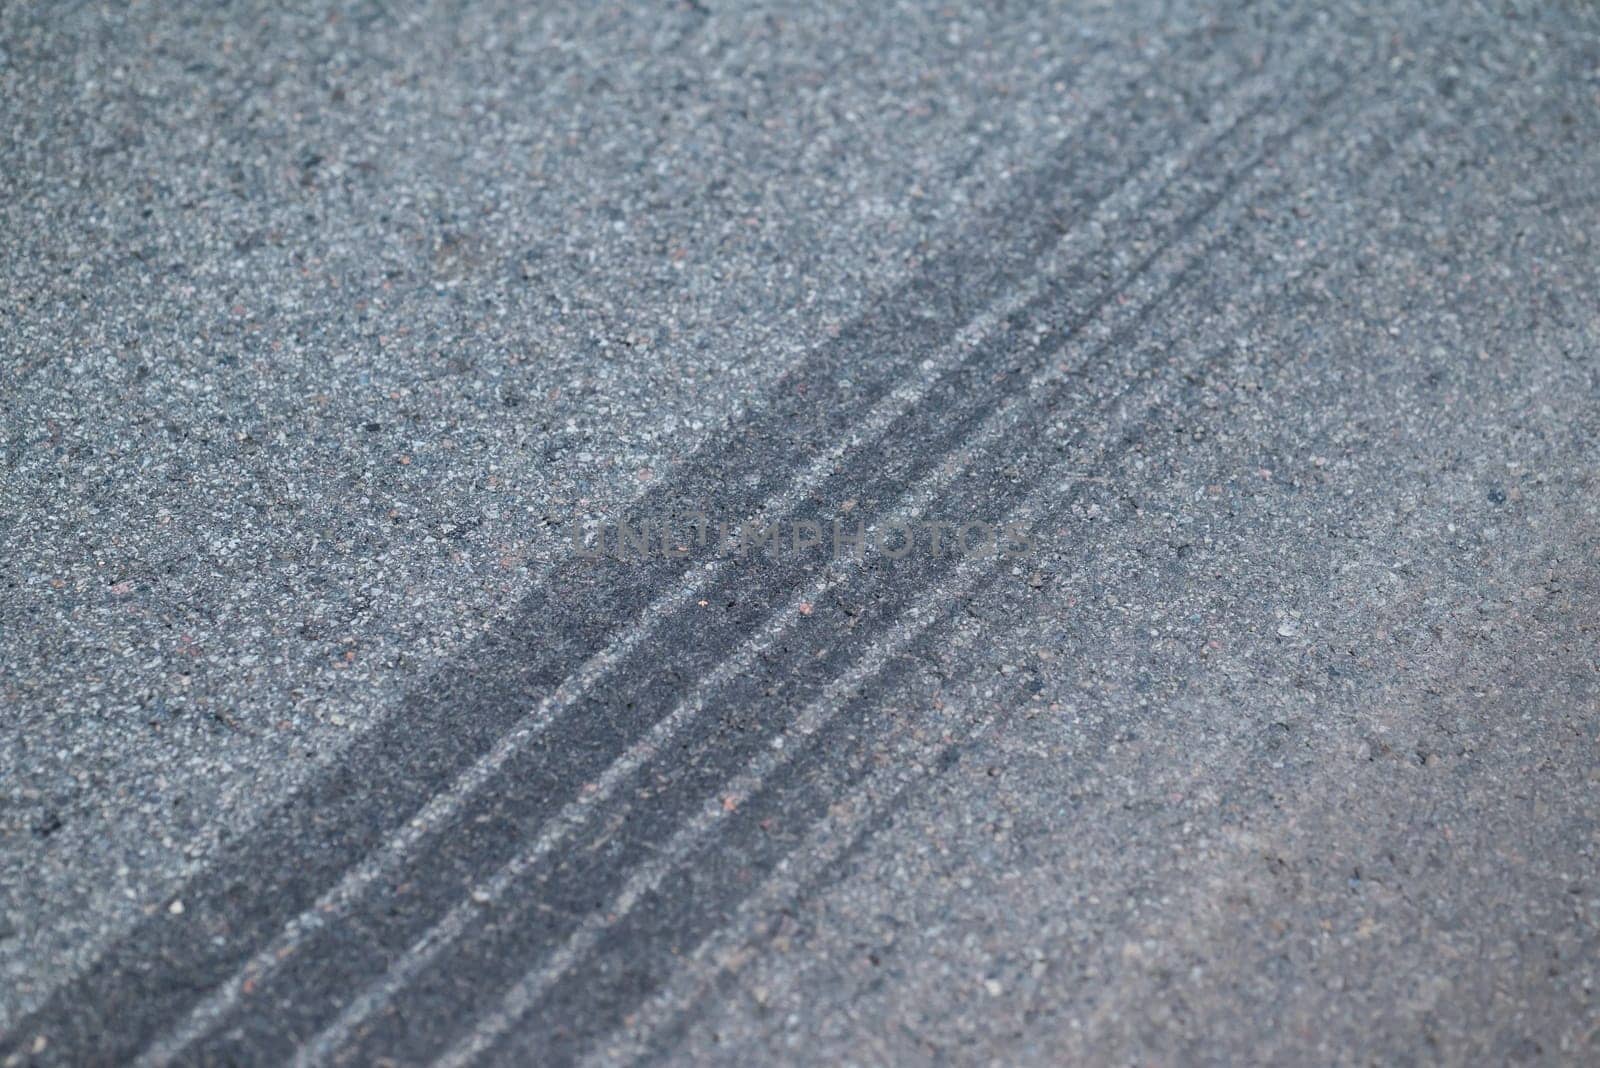 Braking trace on asphalt road by VitaliiPetrushenko